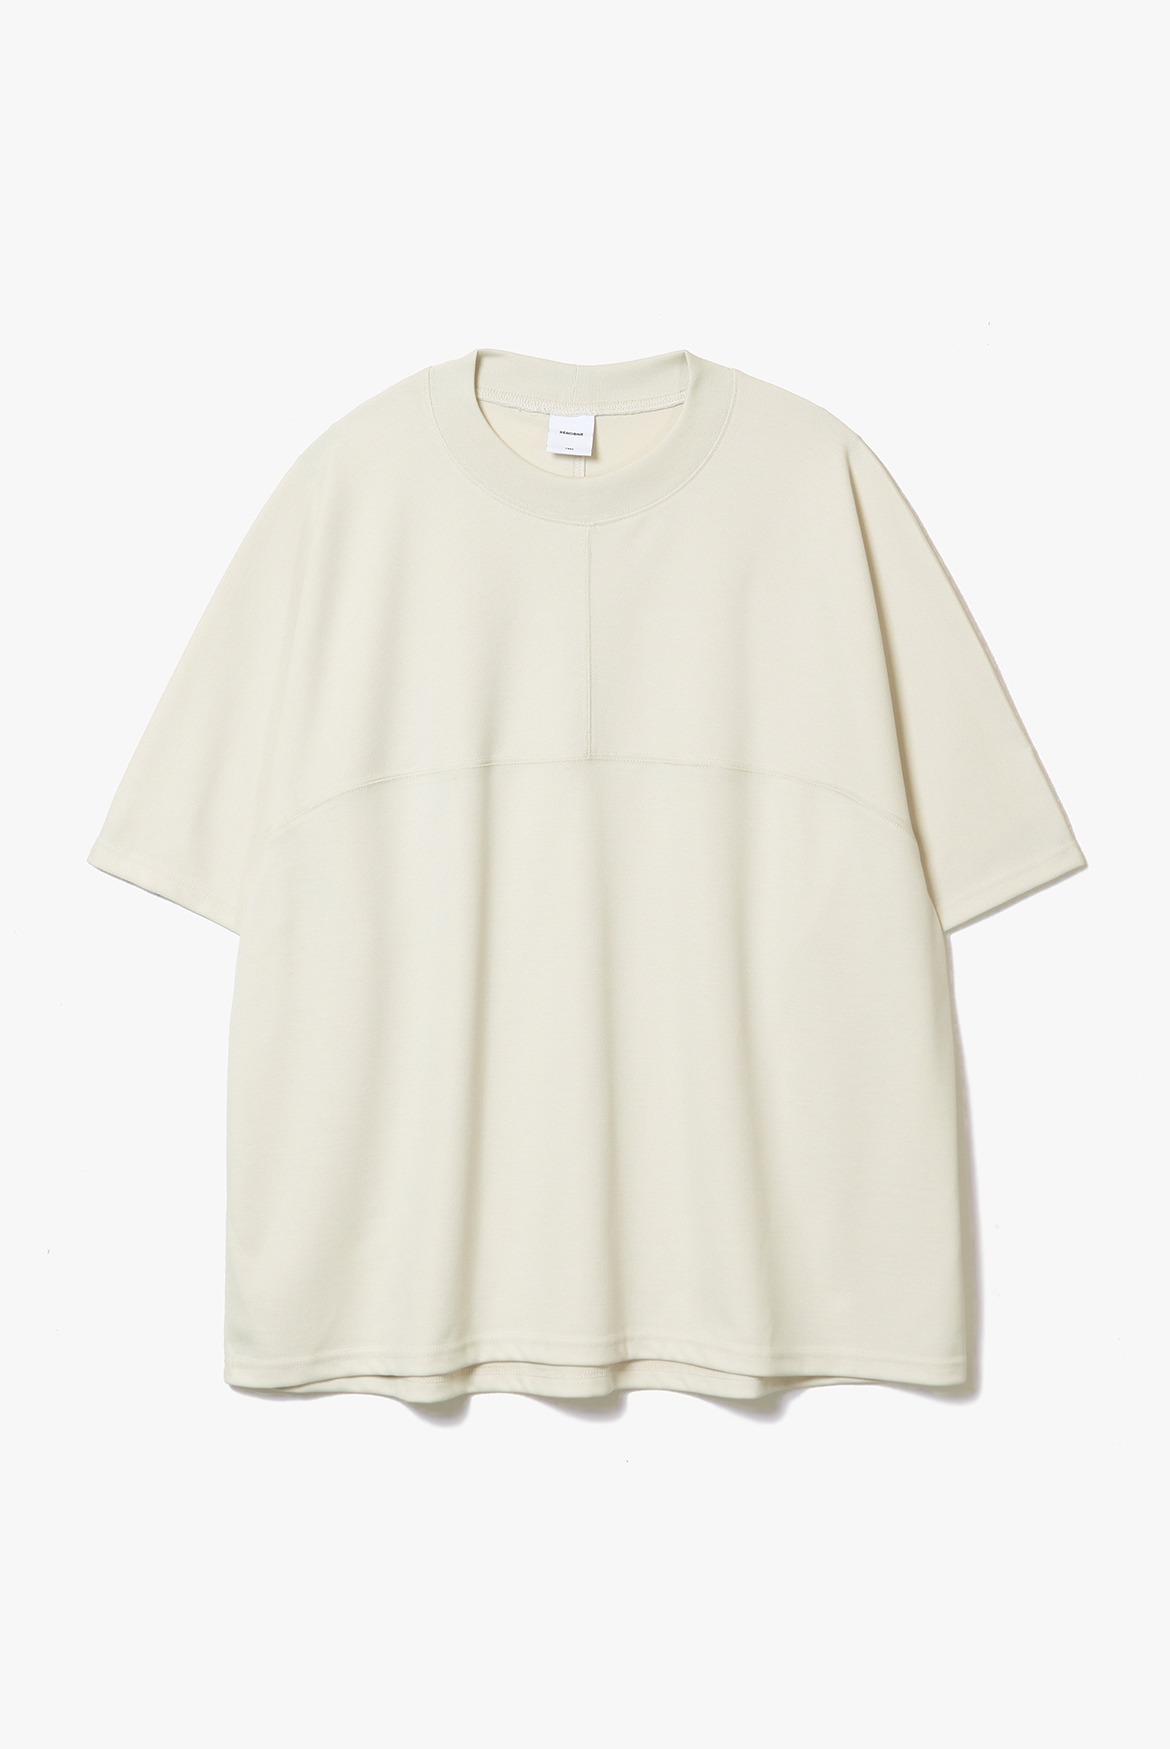 Dolman Sleeve T-Shirts [Ivory]